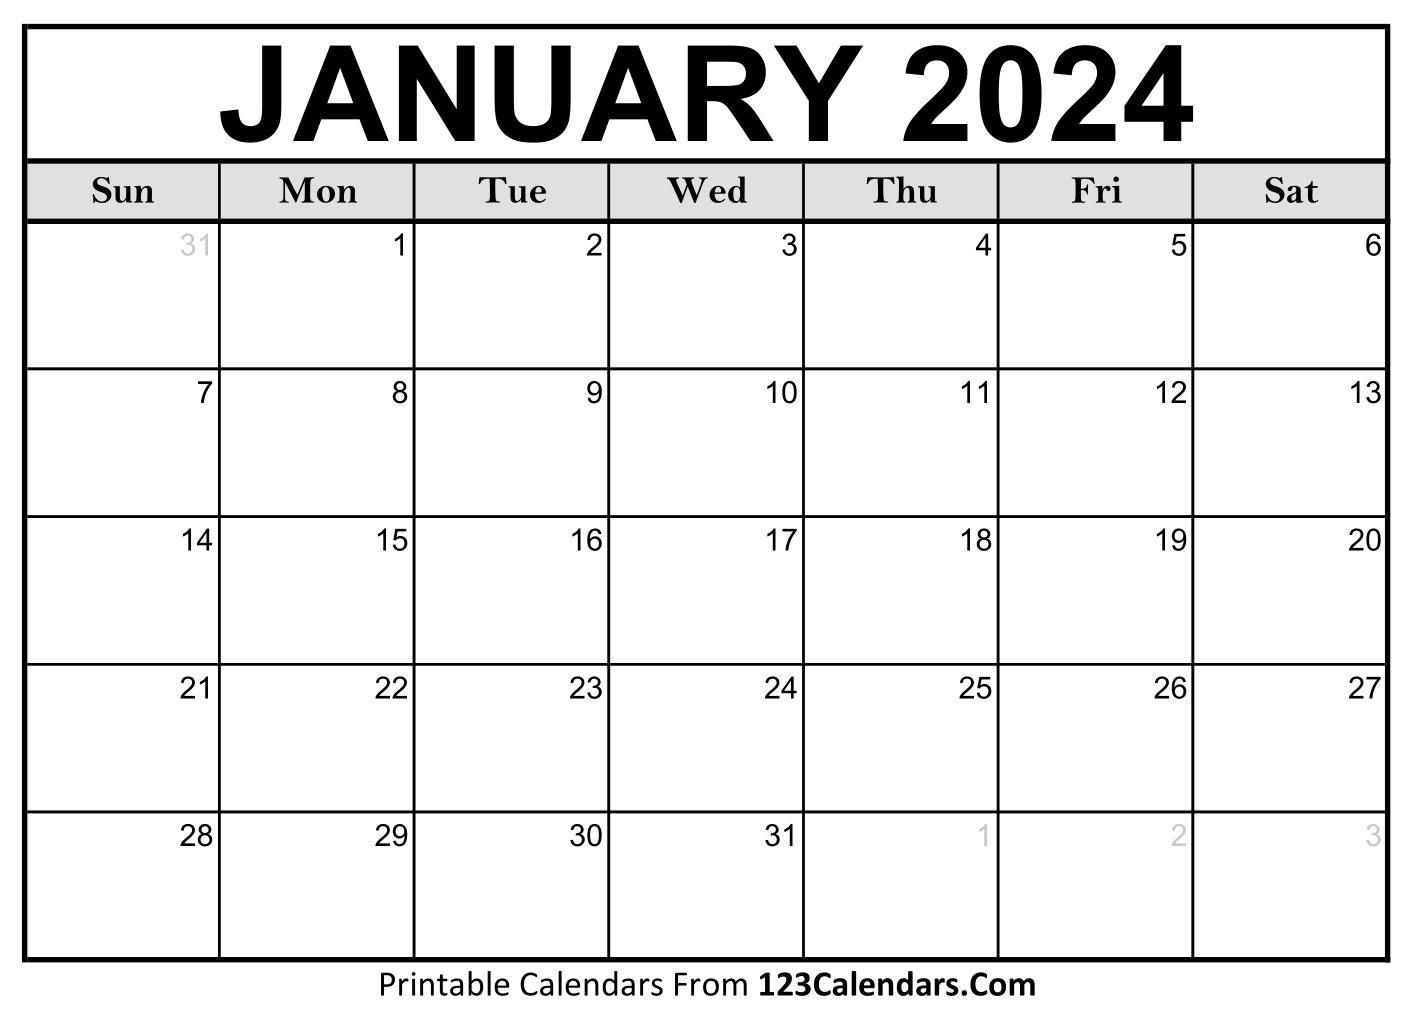 Printable January 2024 Calendar Templates - 123Calendars for Blank January 2024 Printable Calendar